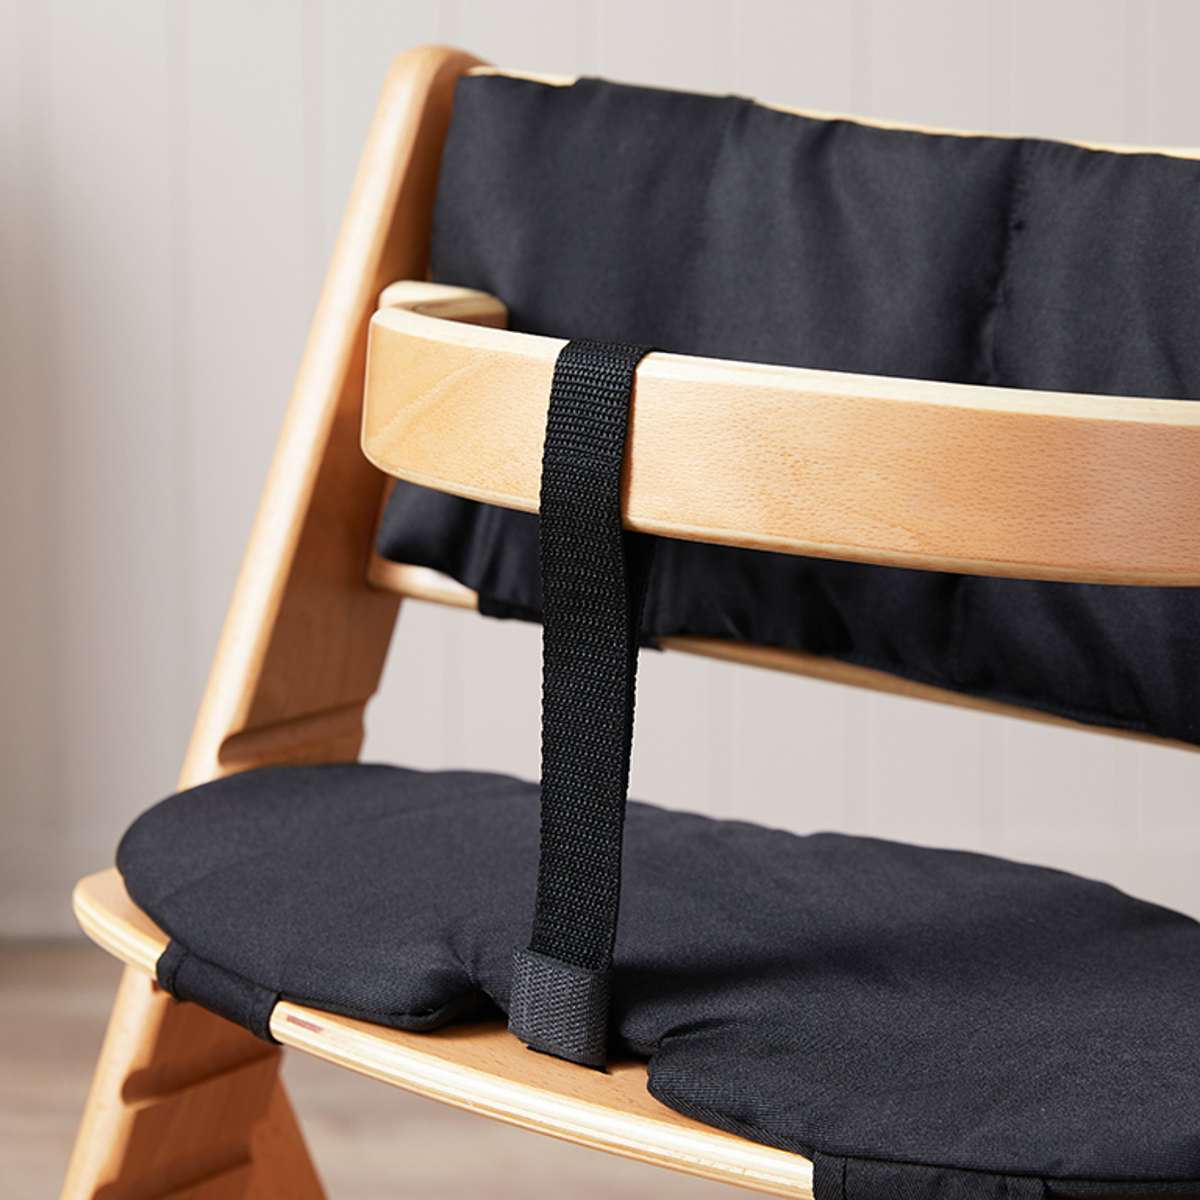 Soho Wooden Highchair Safety Strap